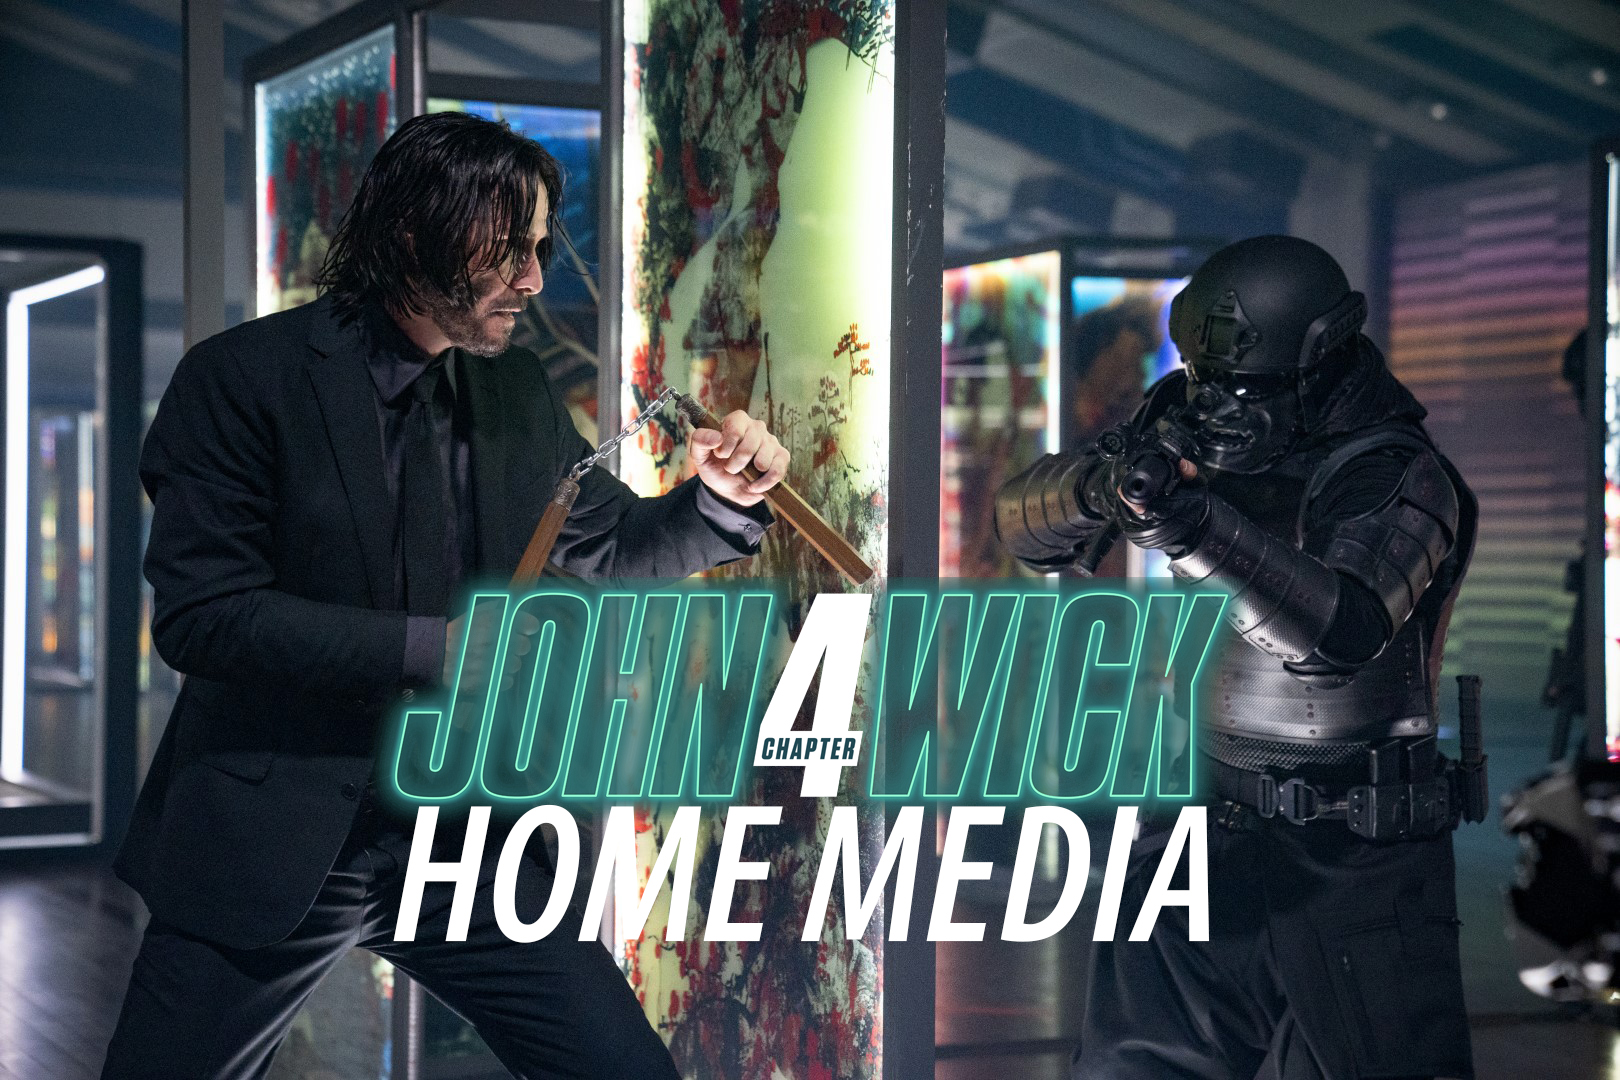 John Wick: Chapter 4 Home Media